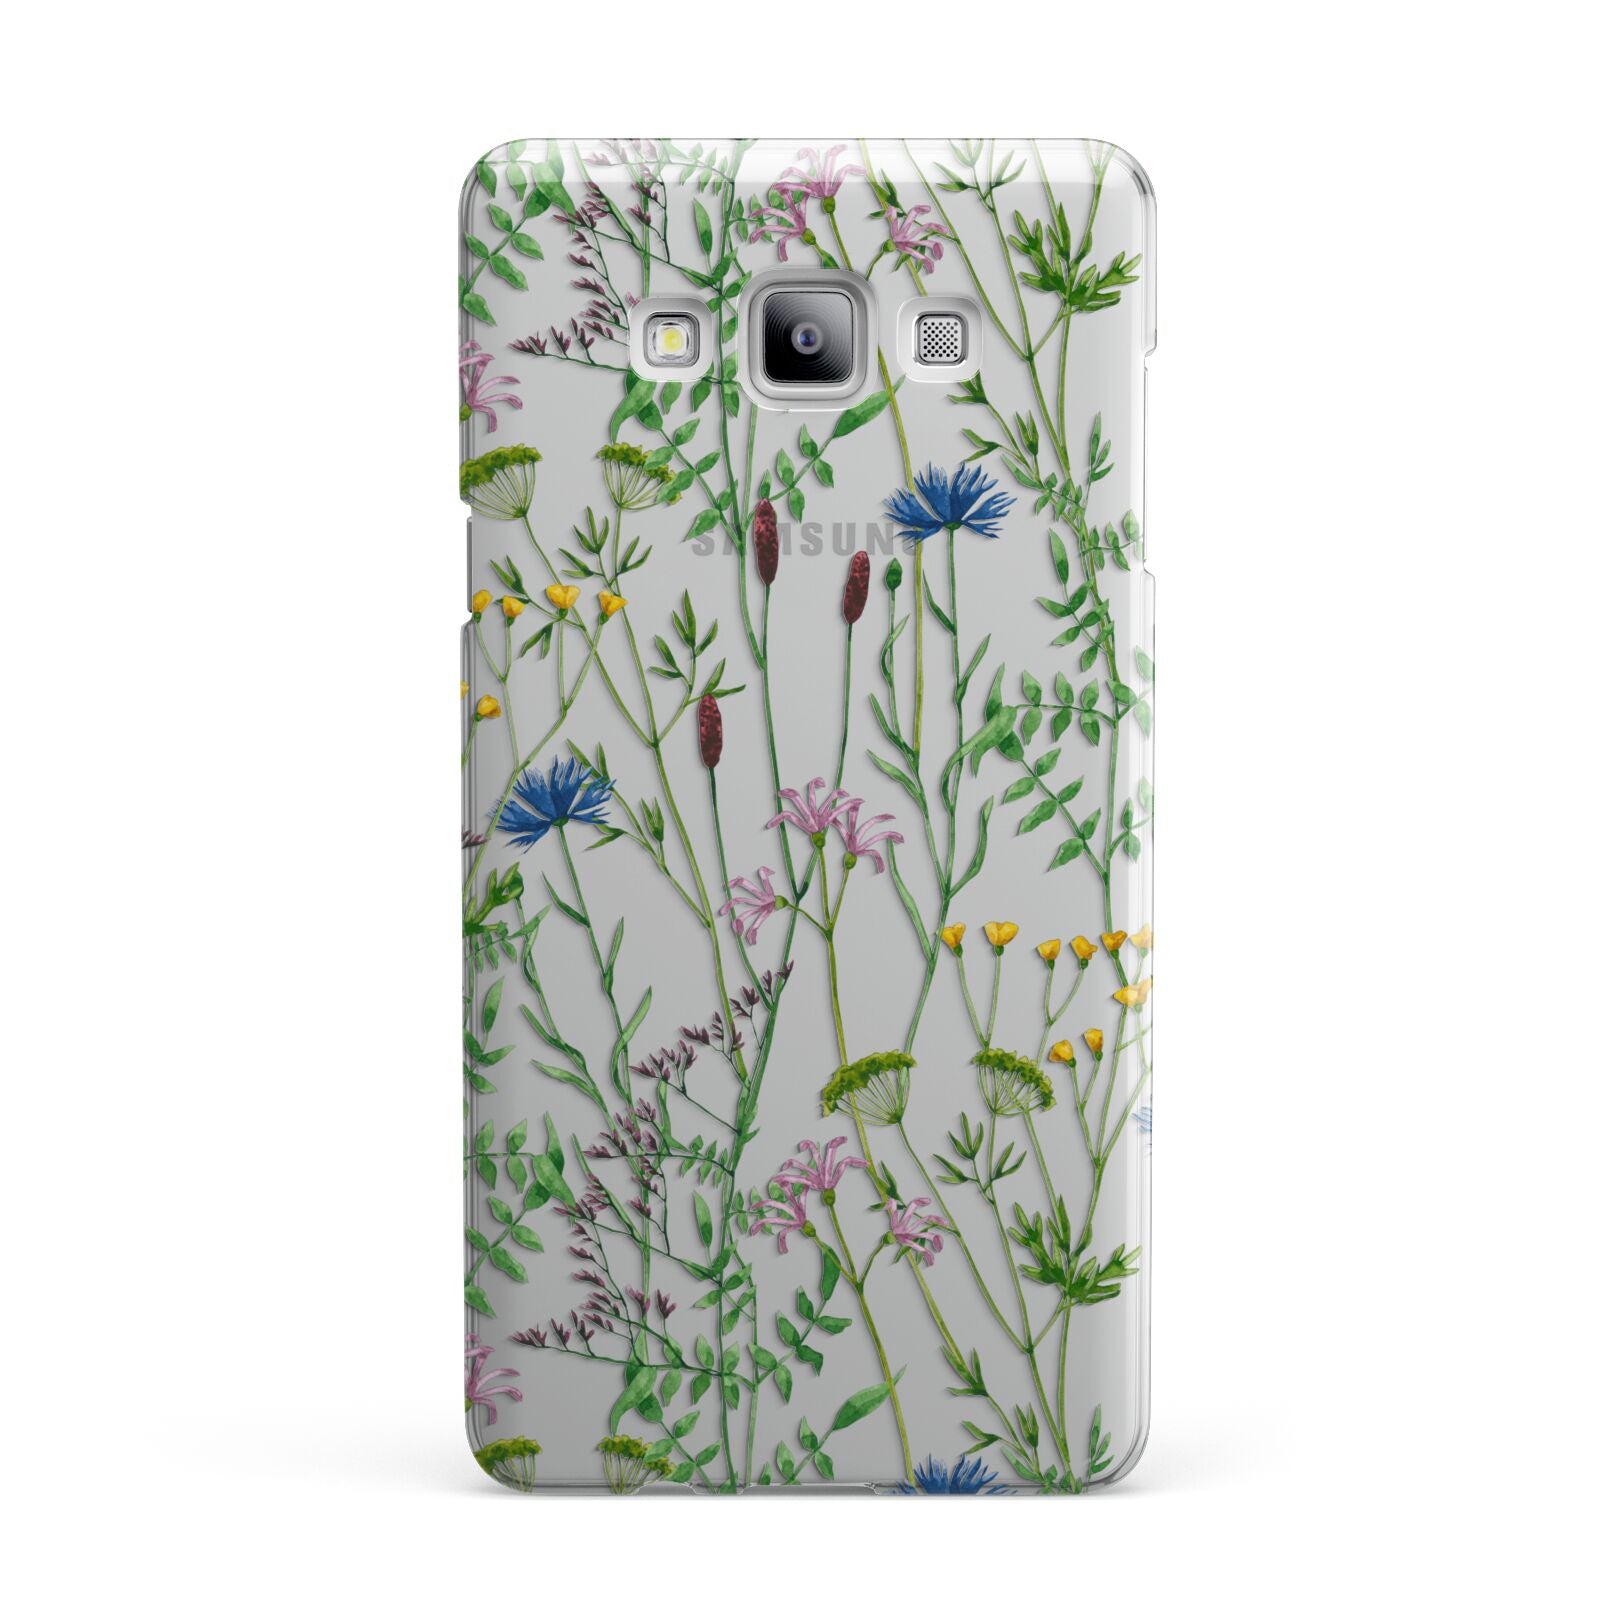 Wildflowers Samsung Galaxy A7 2015 Case